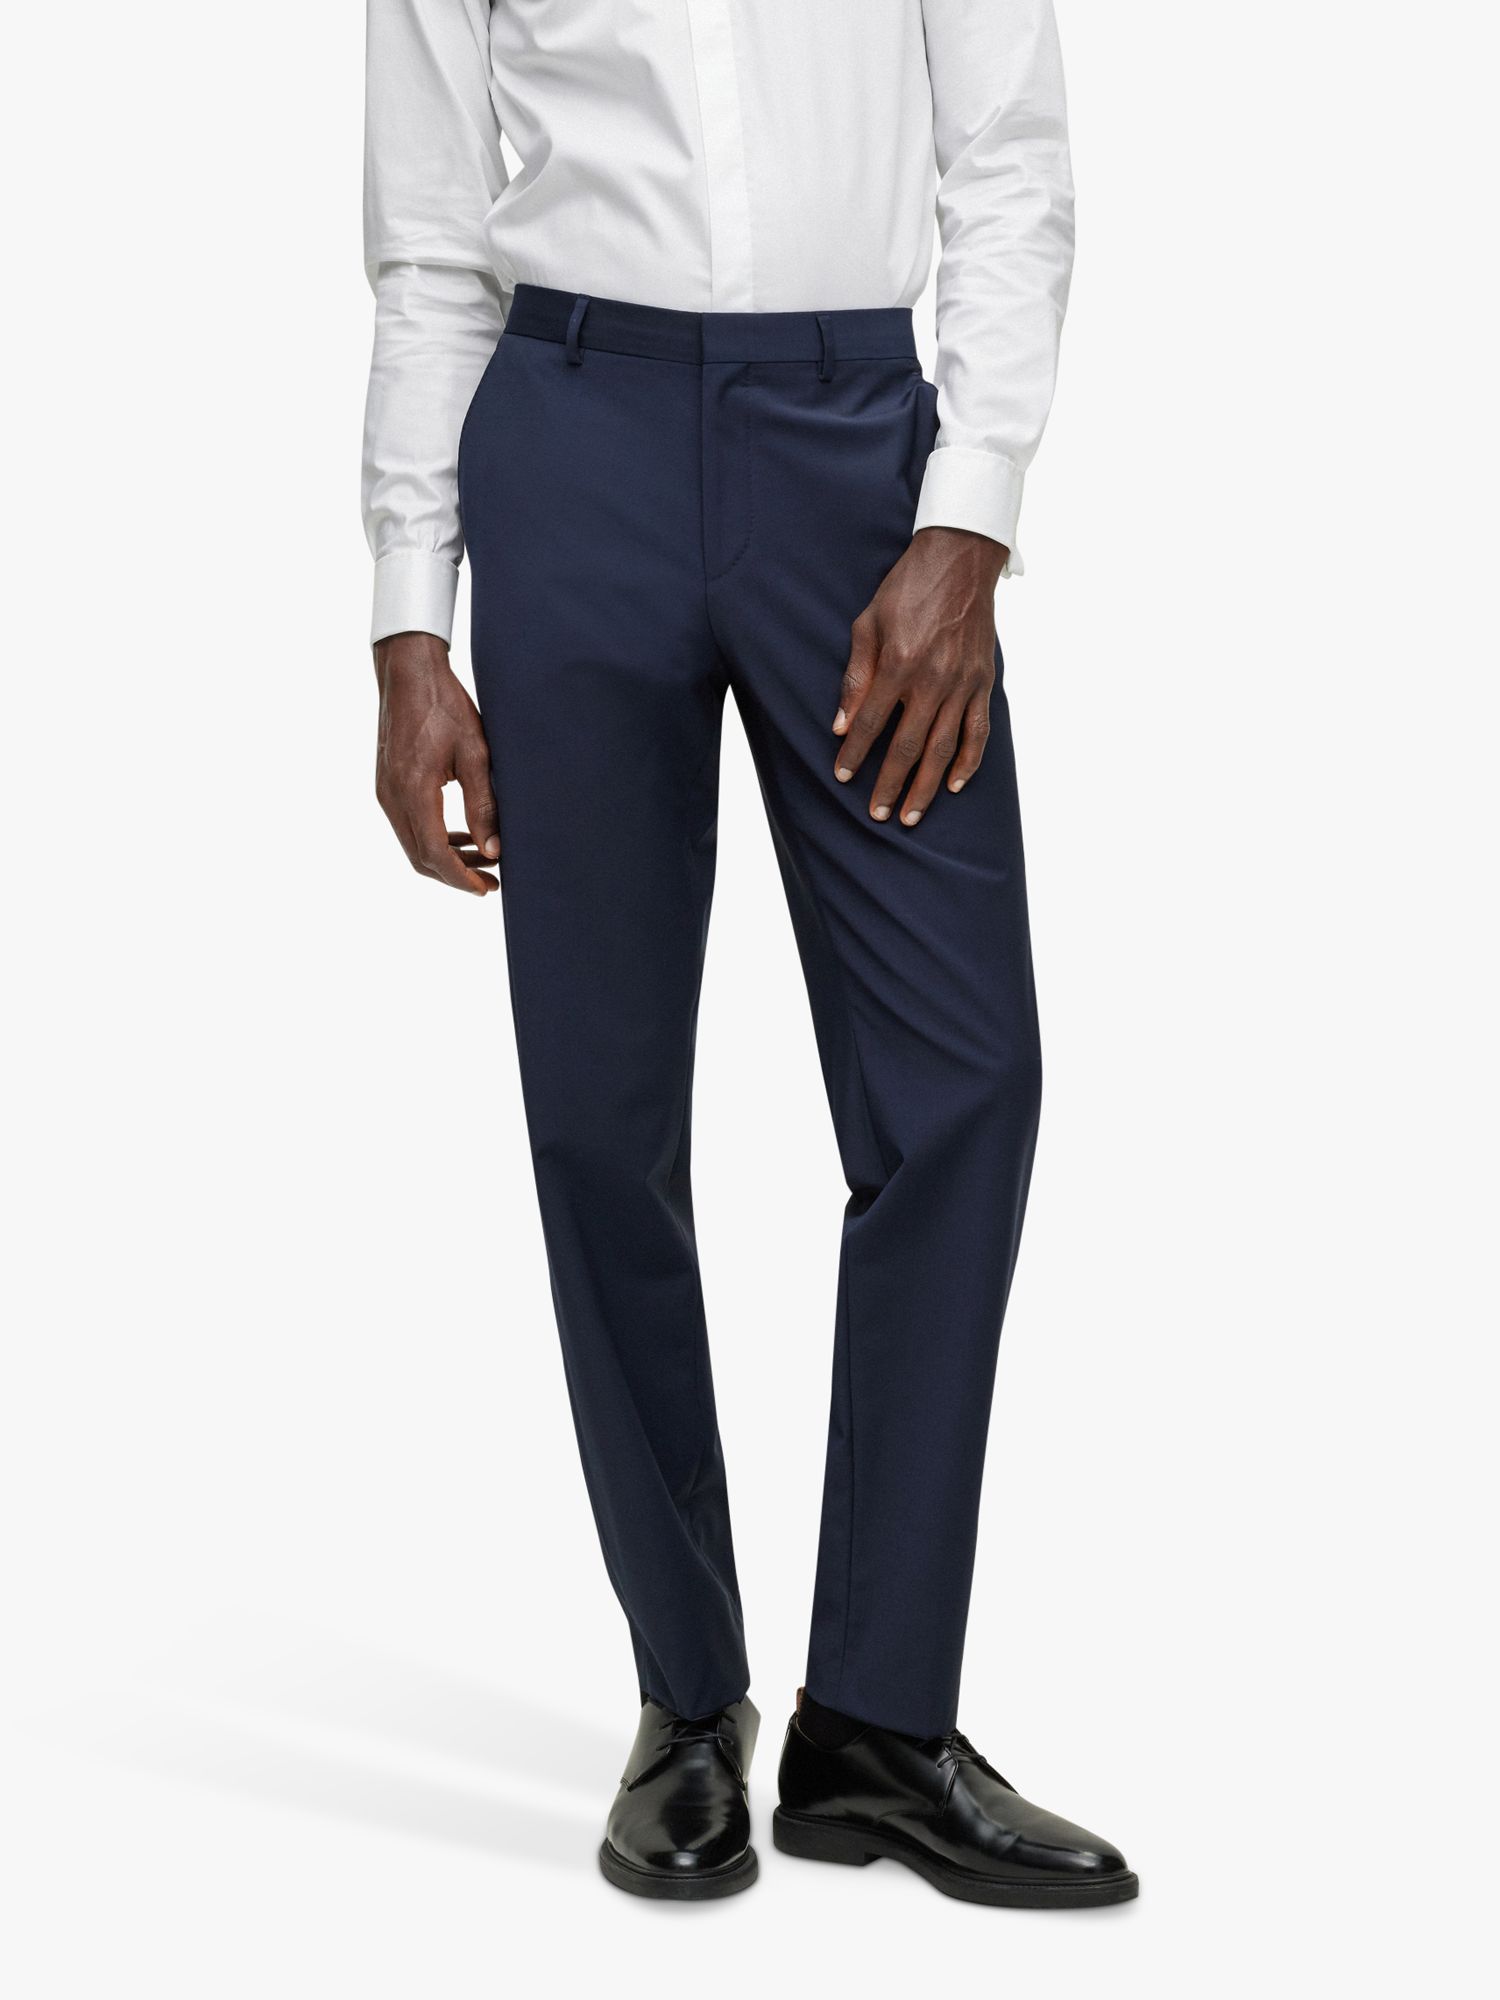 HUGO BOSS Leon Regular Fit Wool Blend Suit Trousers, Dark Blue, 36R